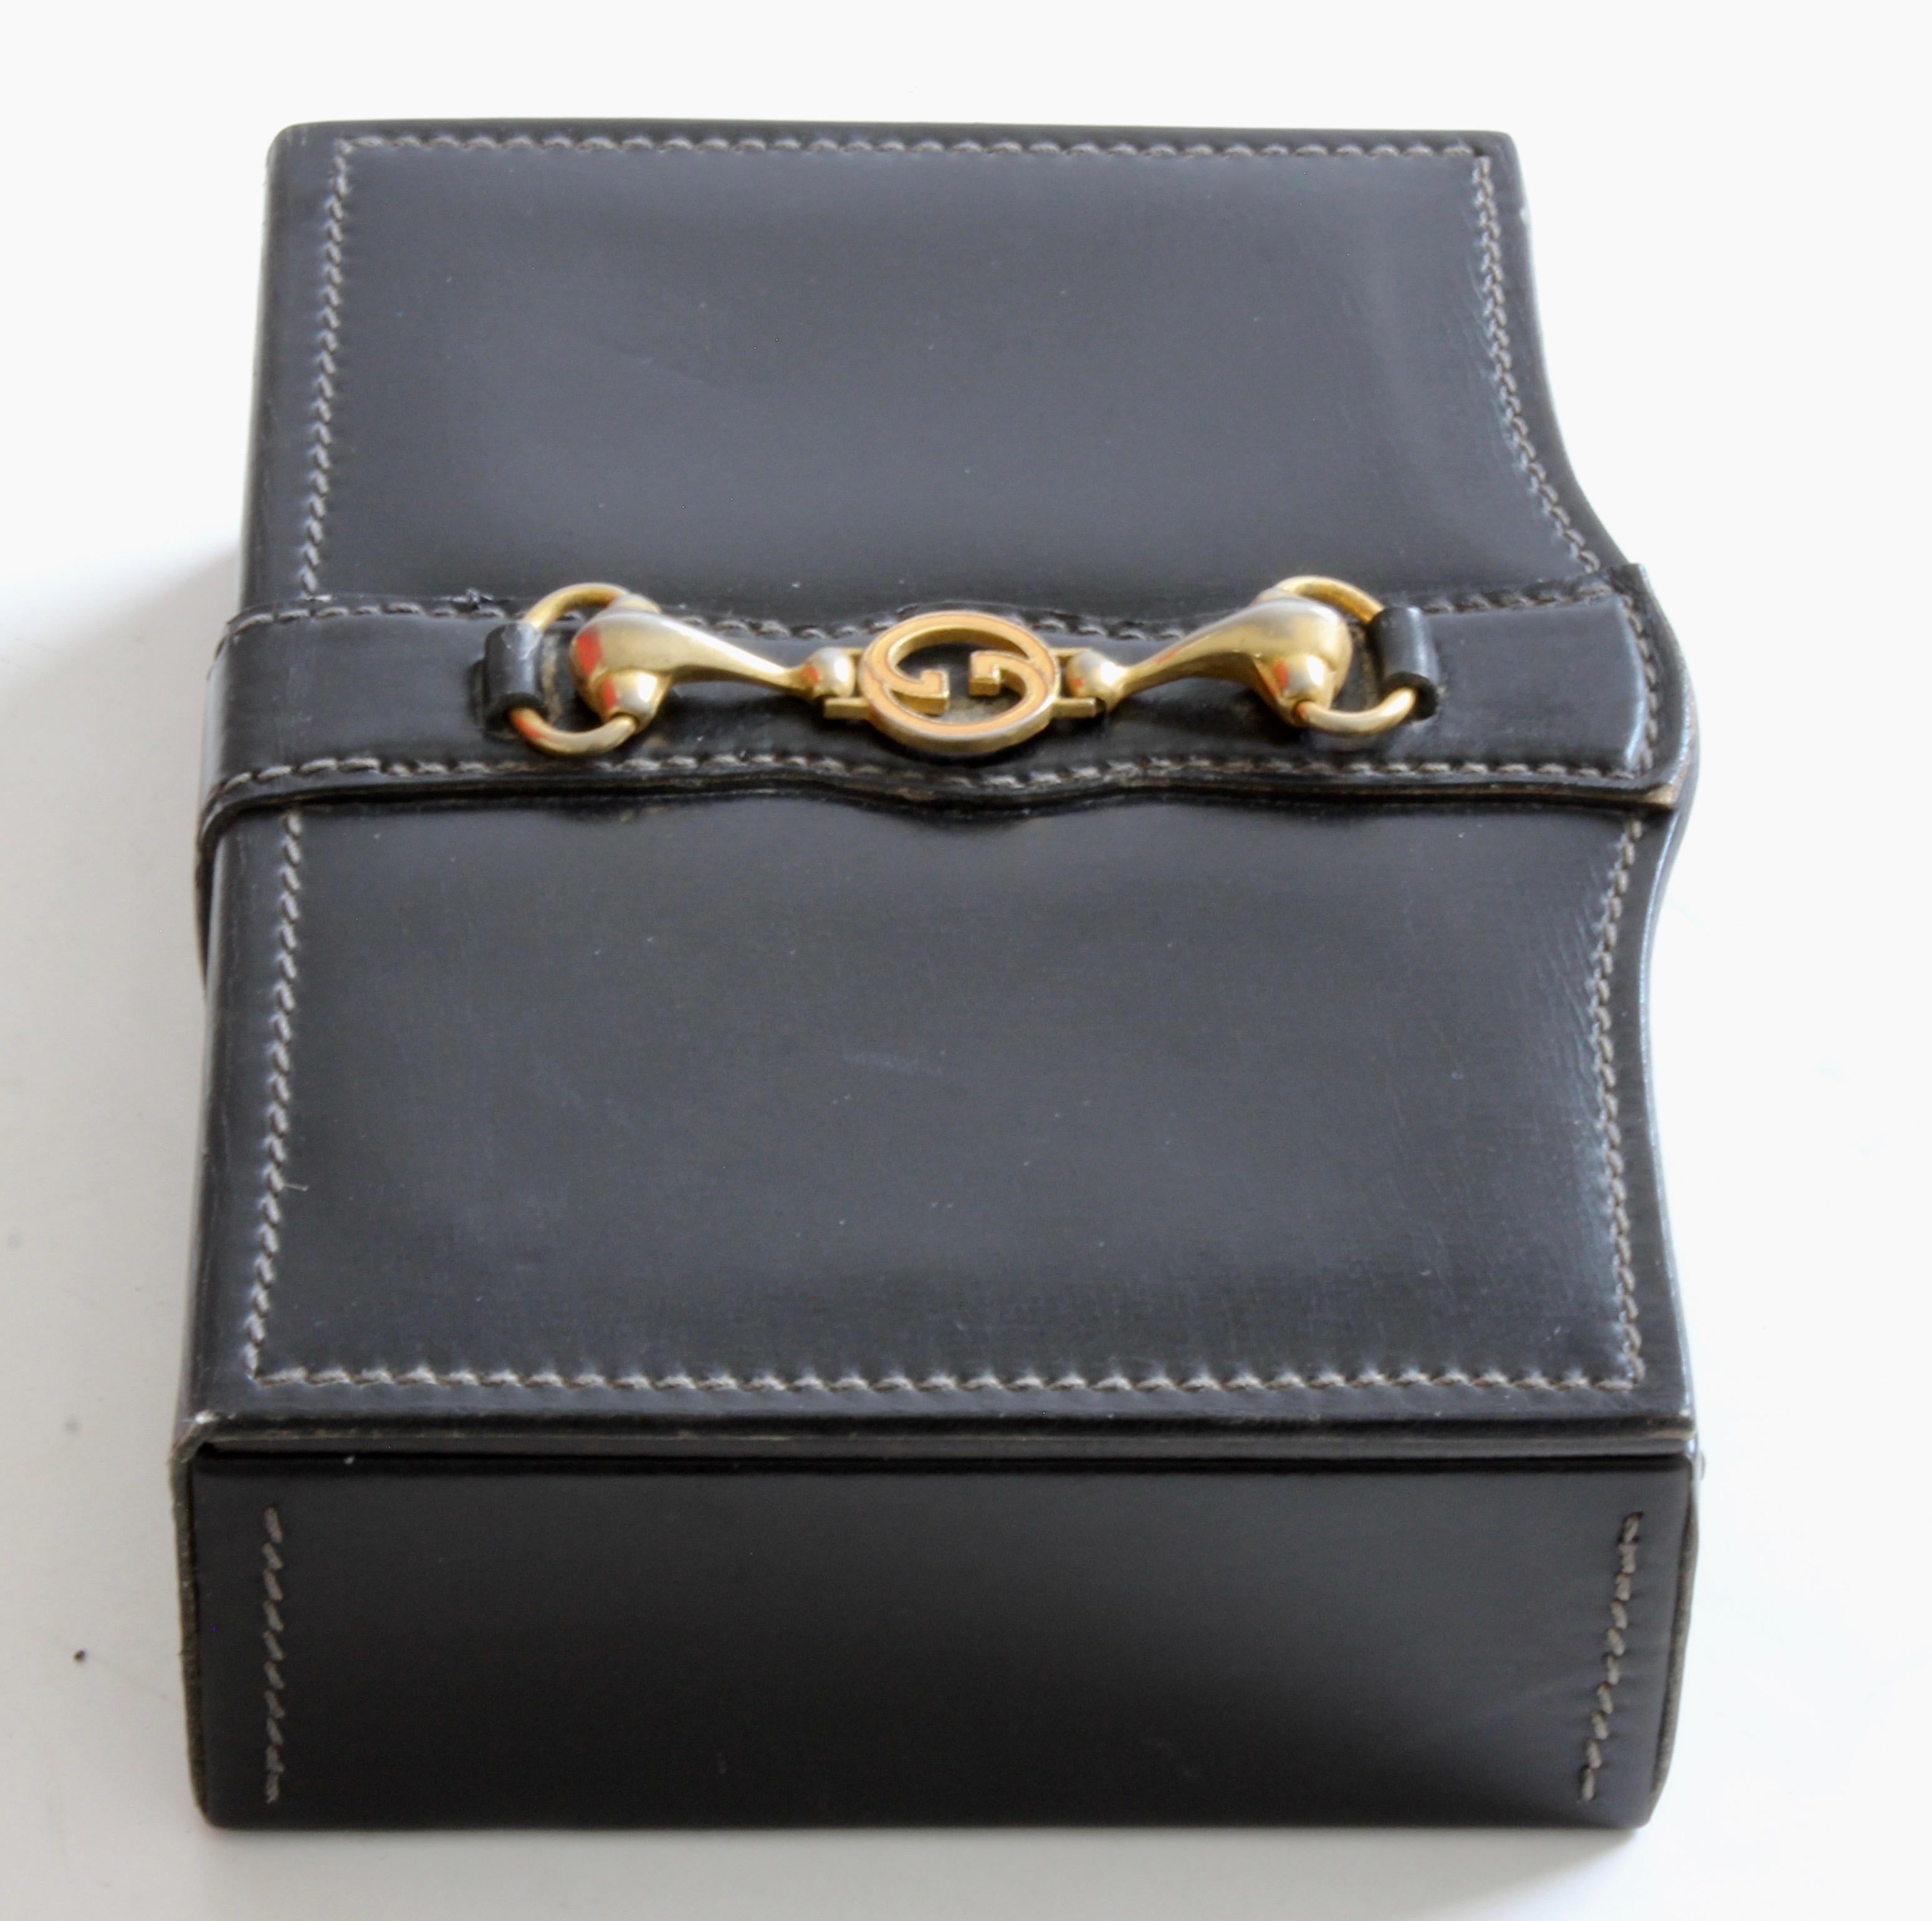 Women's or Men's Vintage Gucci Black Leather Jewelry Case Trinket Box Equestrian Motif Horse Bit